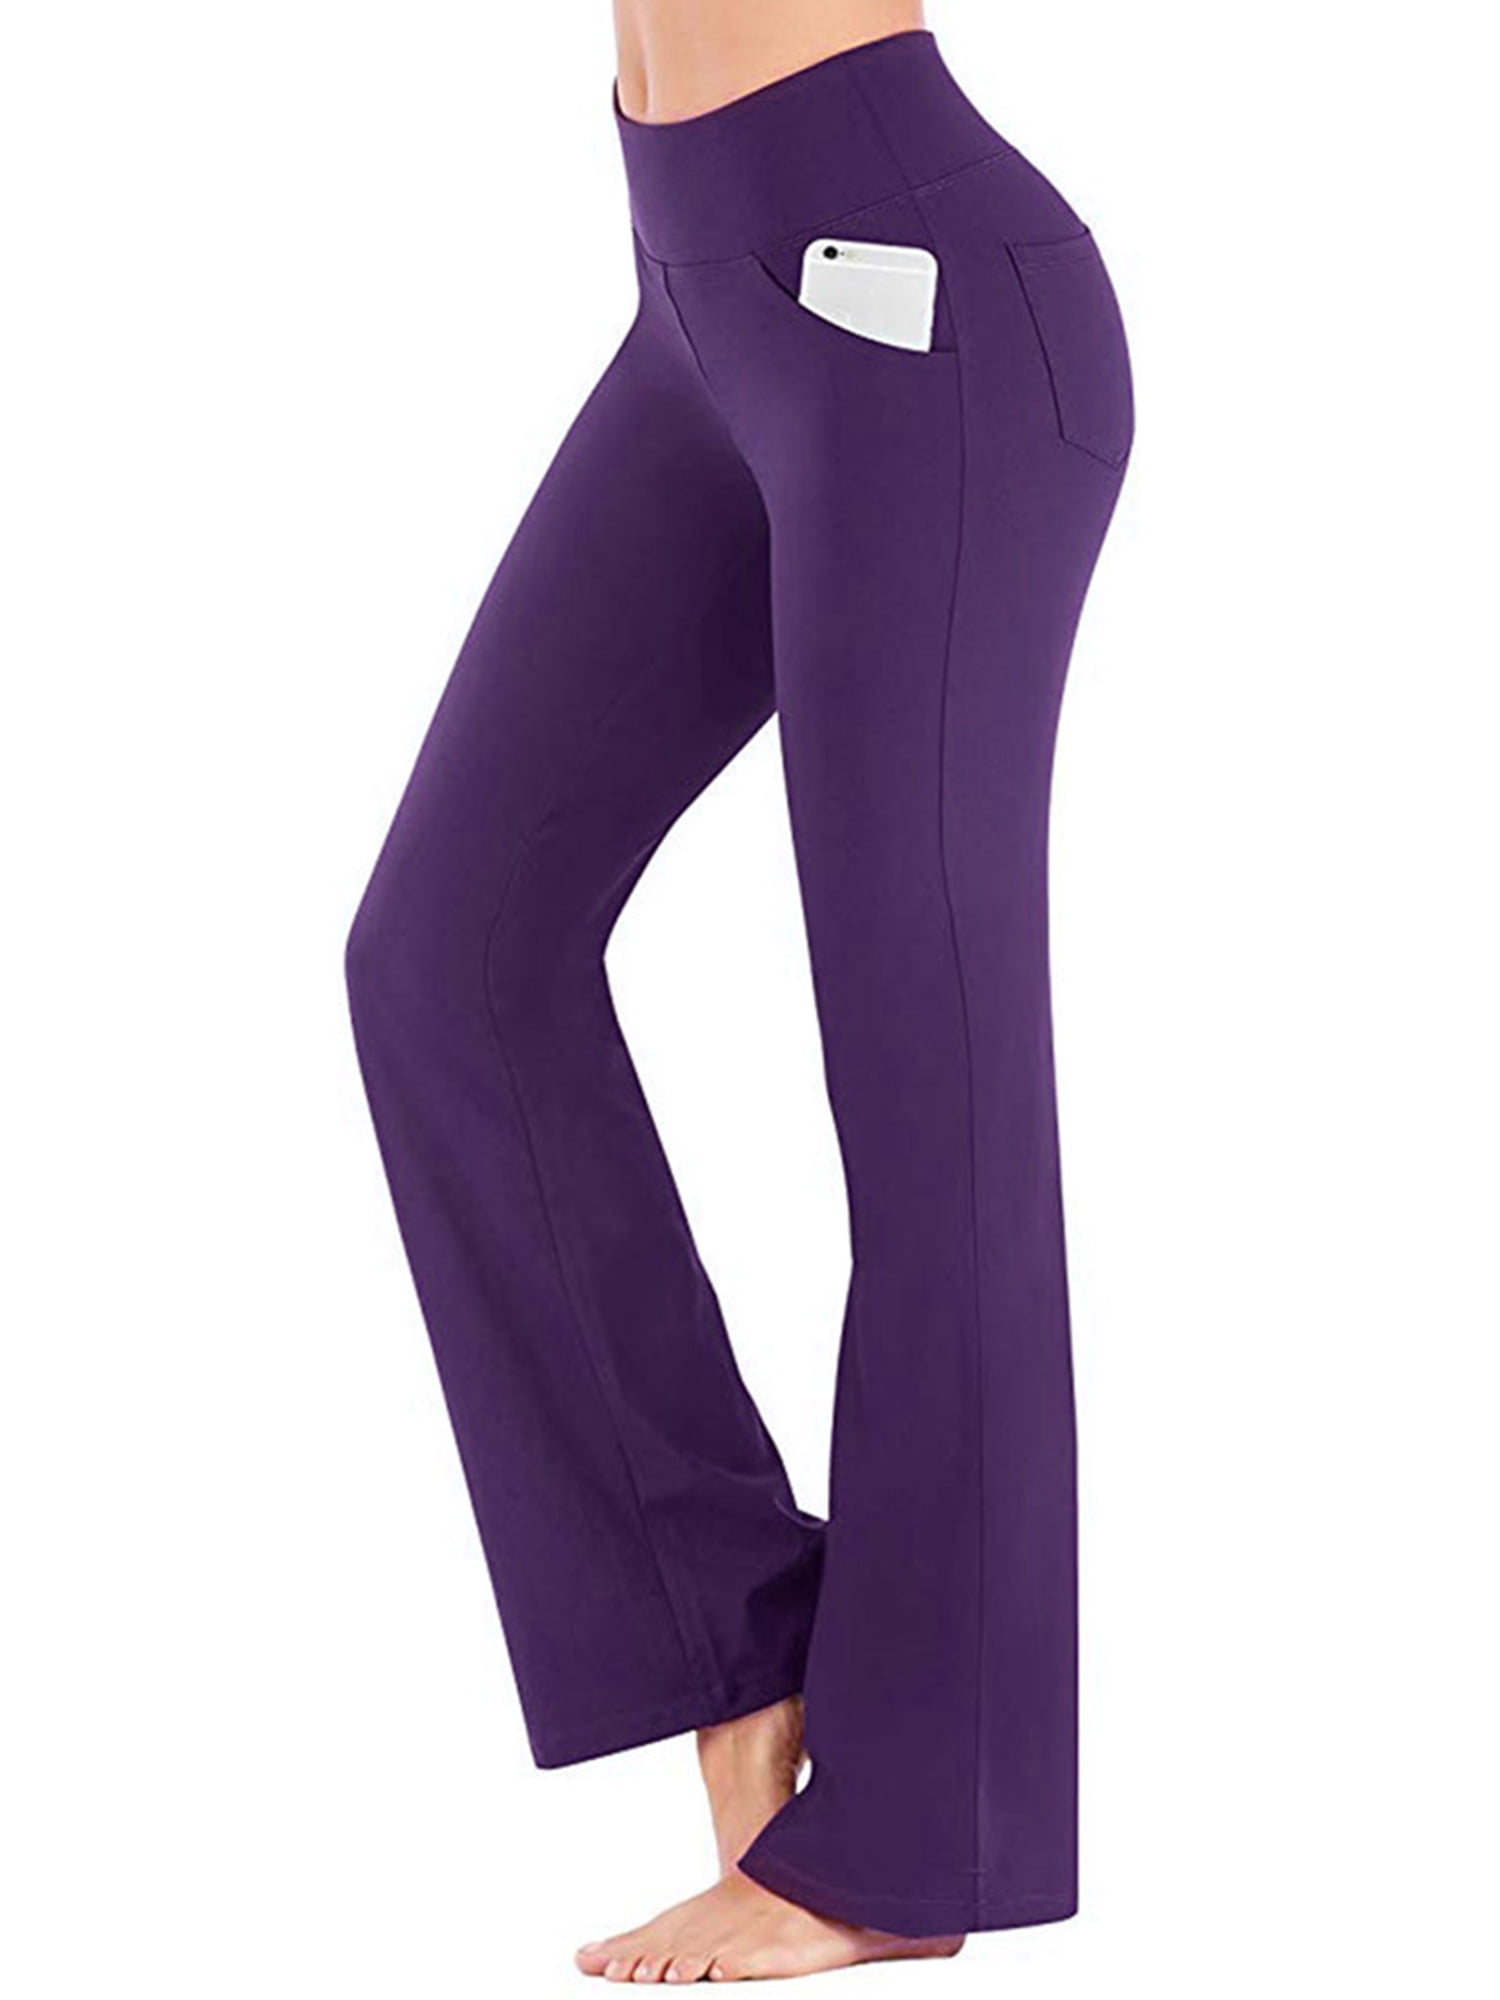 Keolorn Women's Bootcut Yoga Pants with Pockets High Waist Bootleg Yoga Workout Pants for Women 